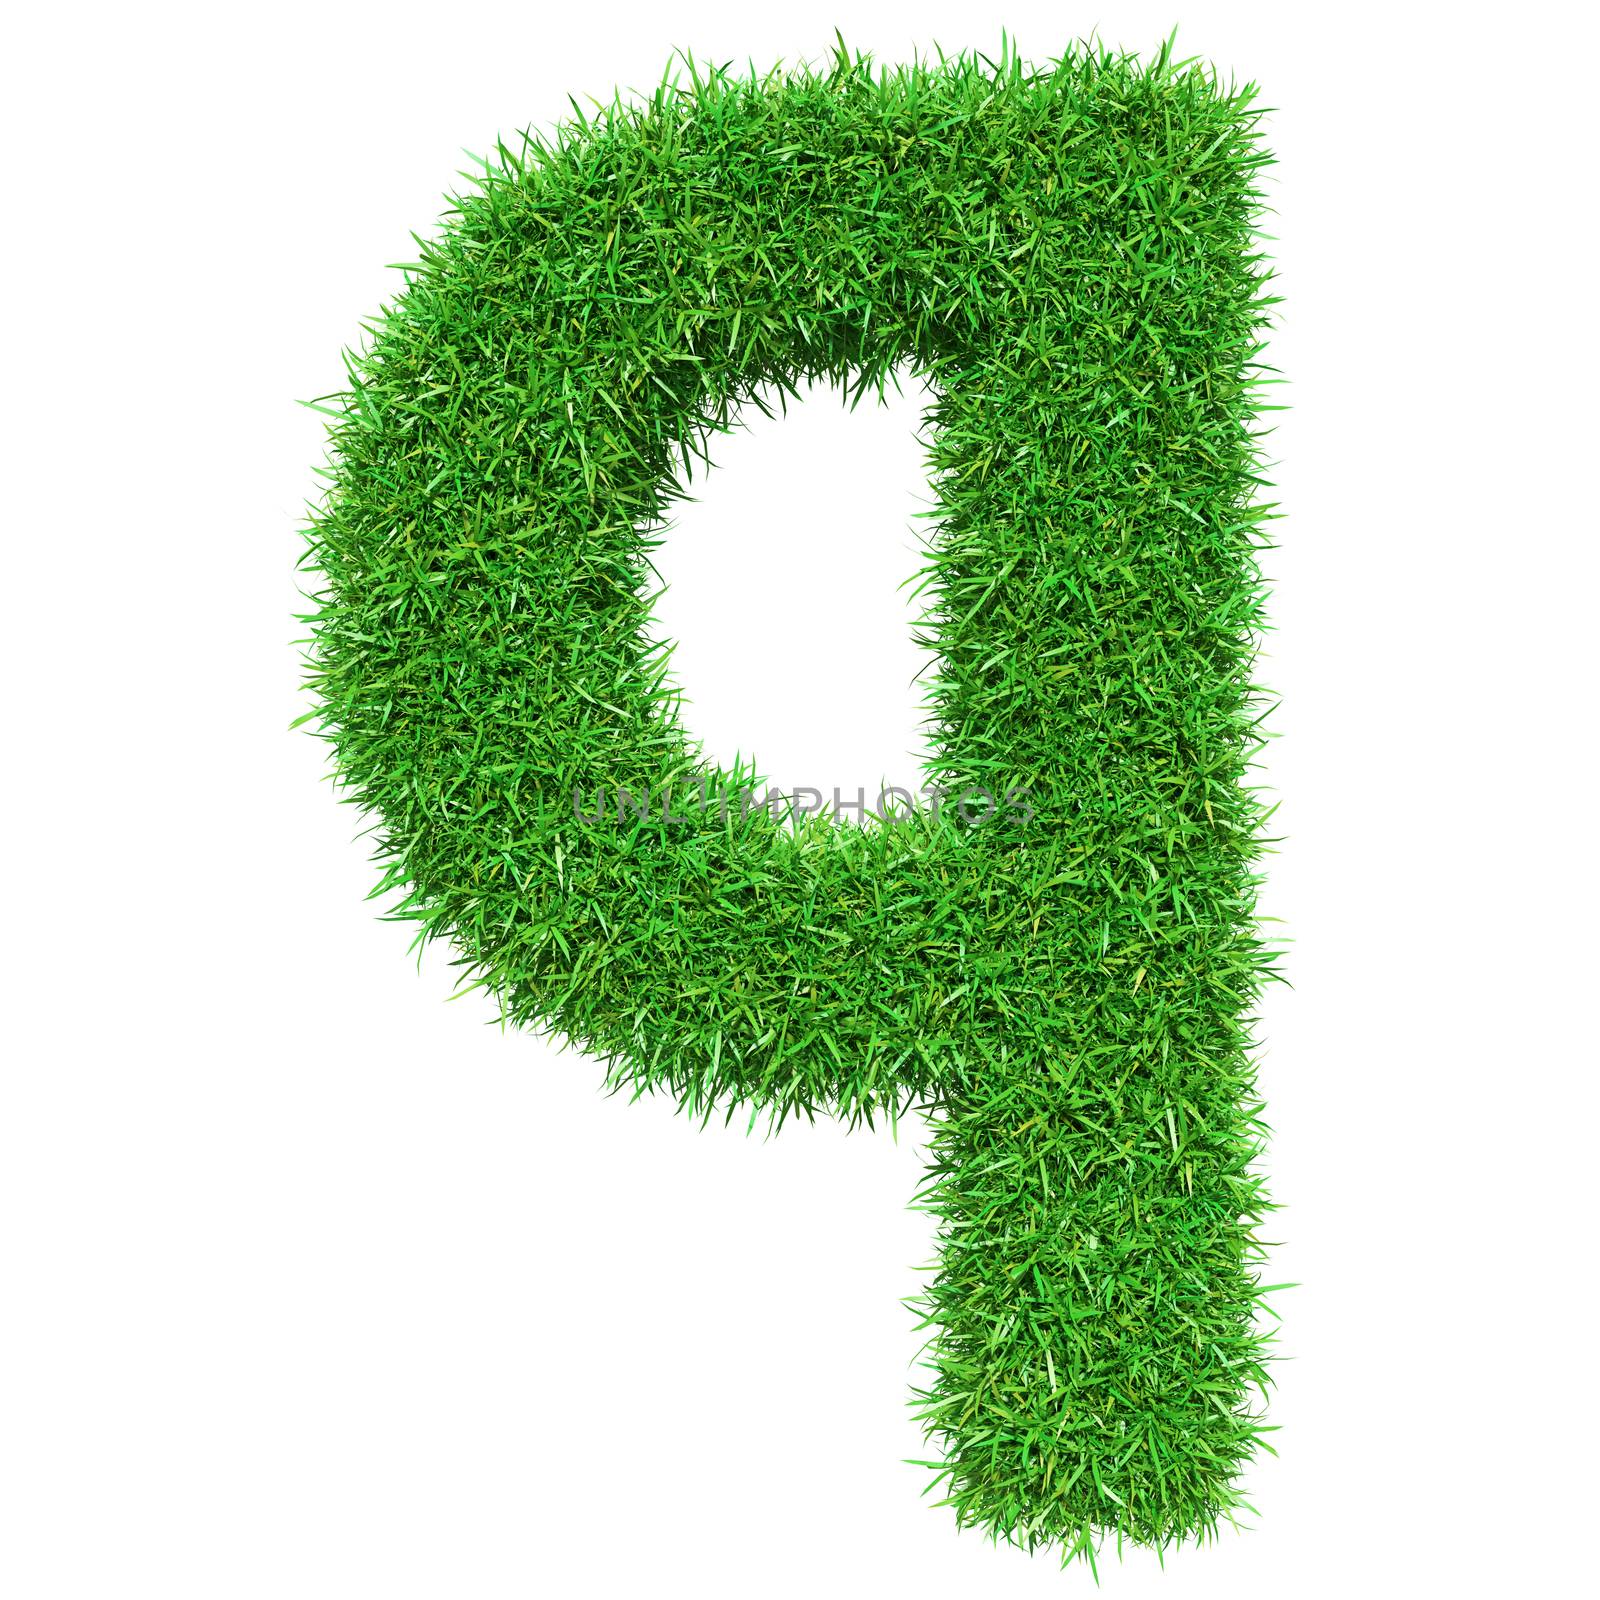 Green Grass Letter Q by cherezoff